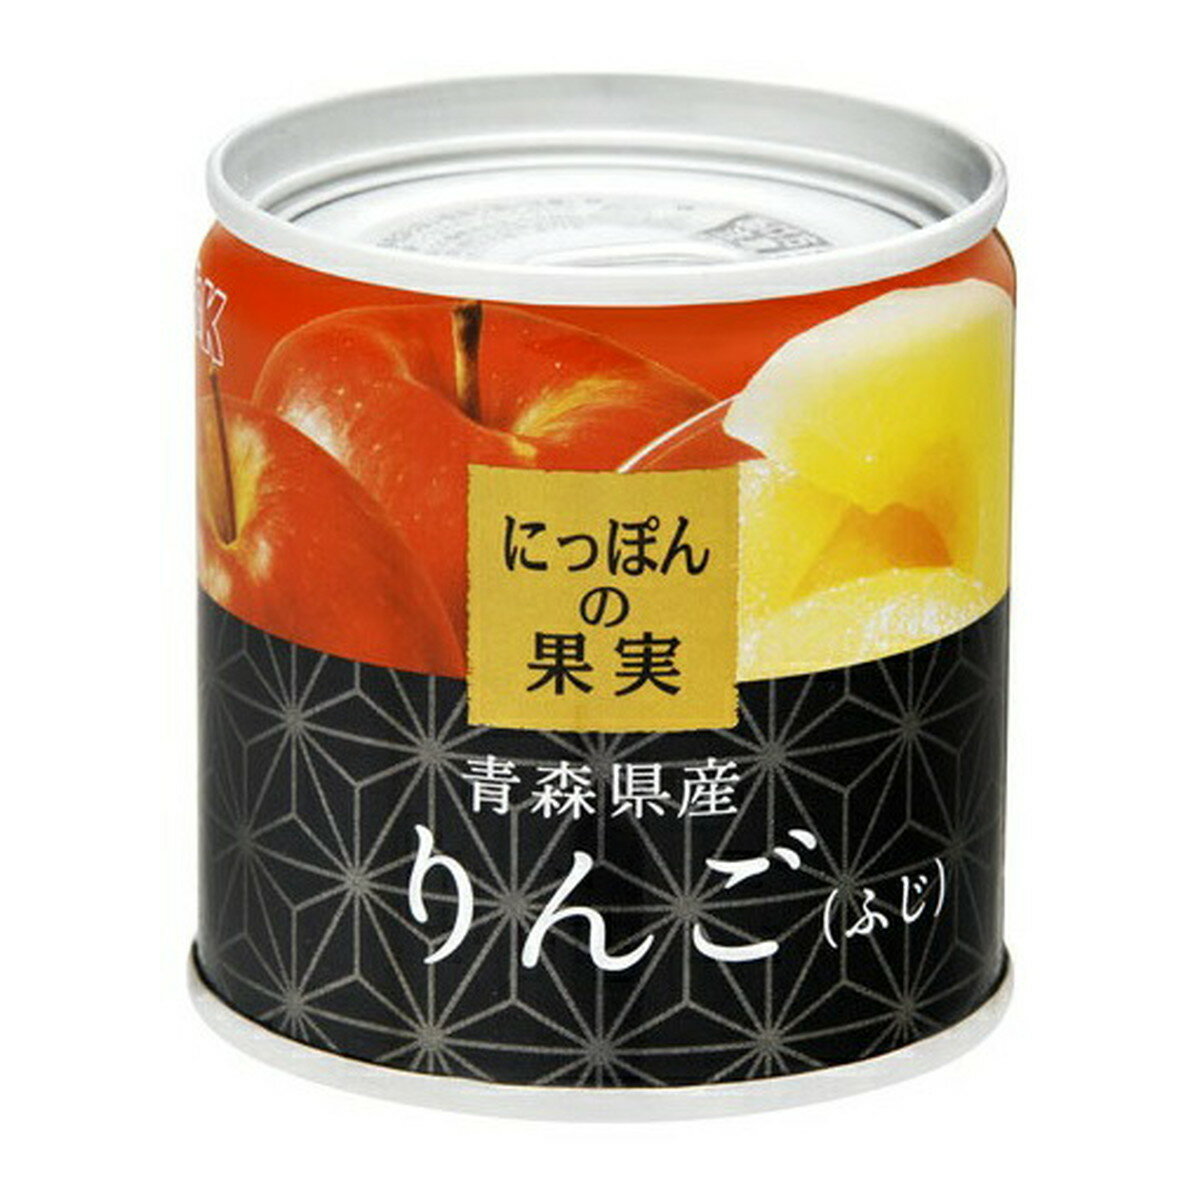 KK にっぽんの果実 青森県産 りんご ふじ 缶詰